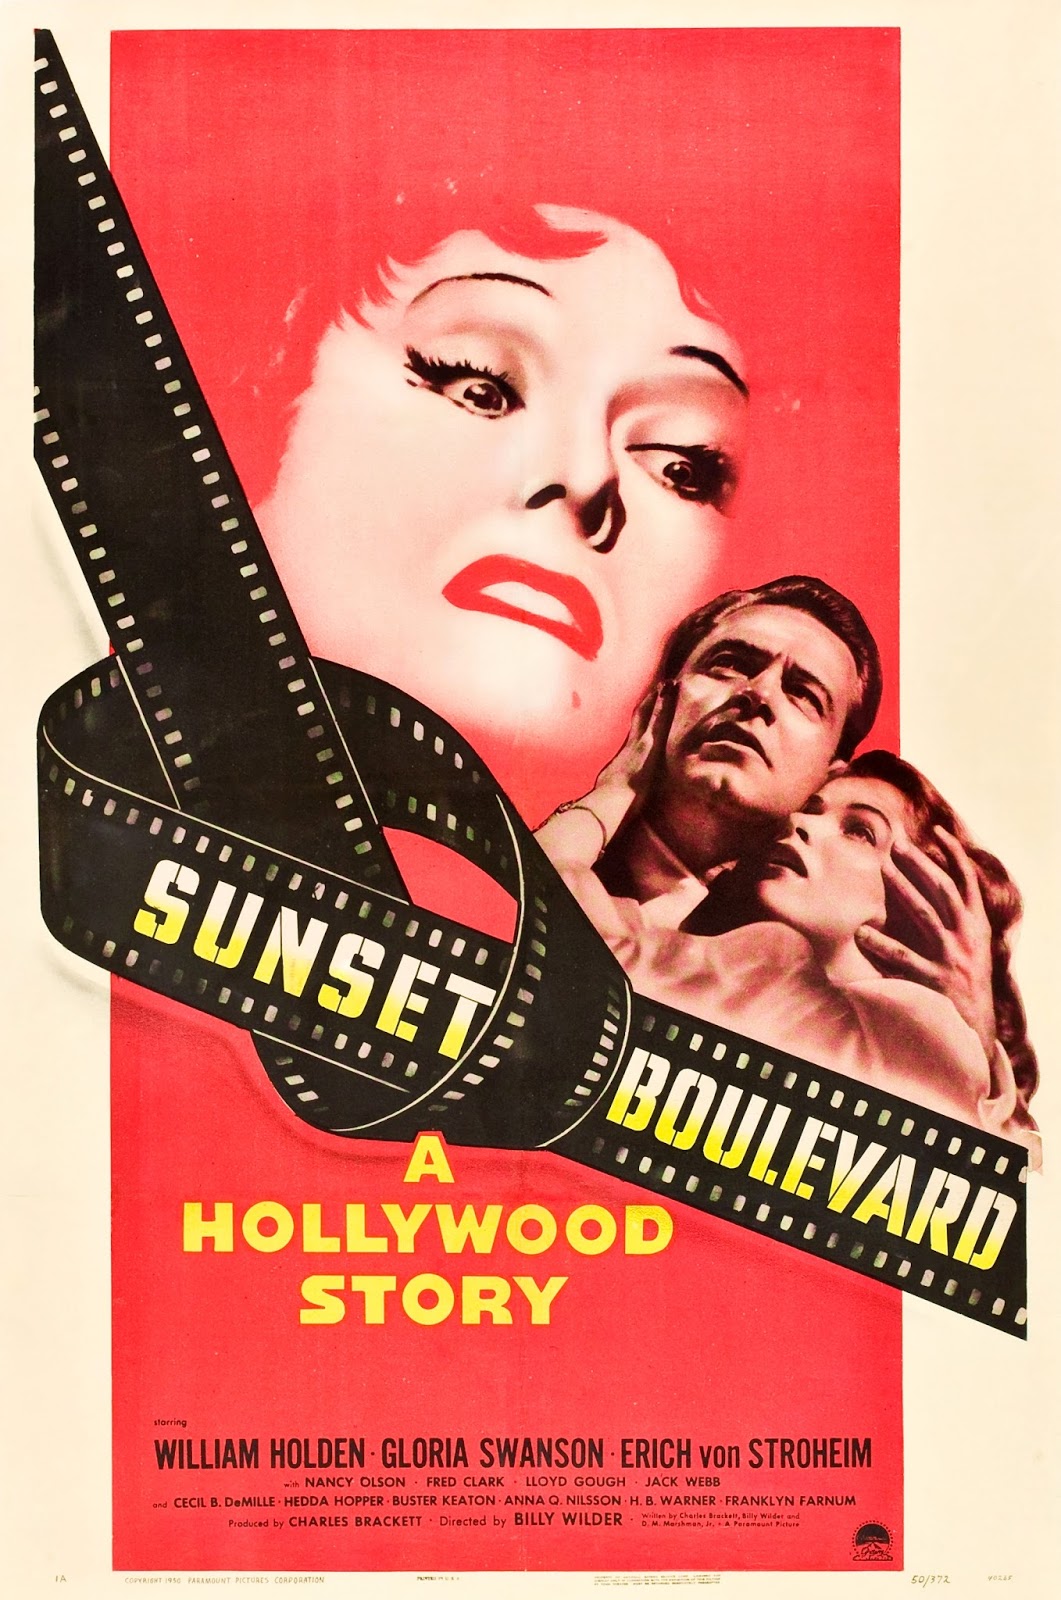 Bing Crosby Autograph with Van Heflin - Hollywood Movie Posters